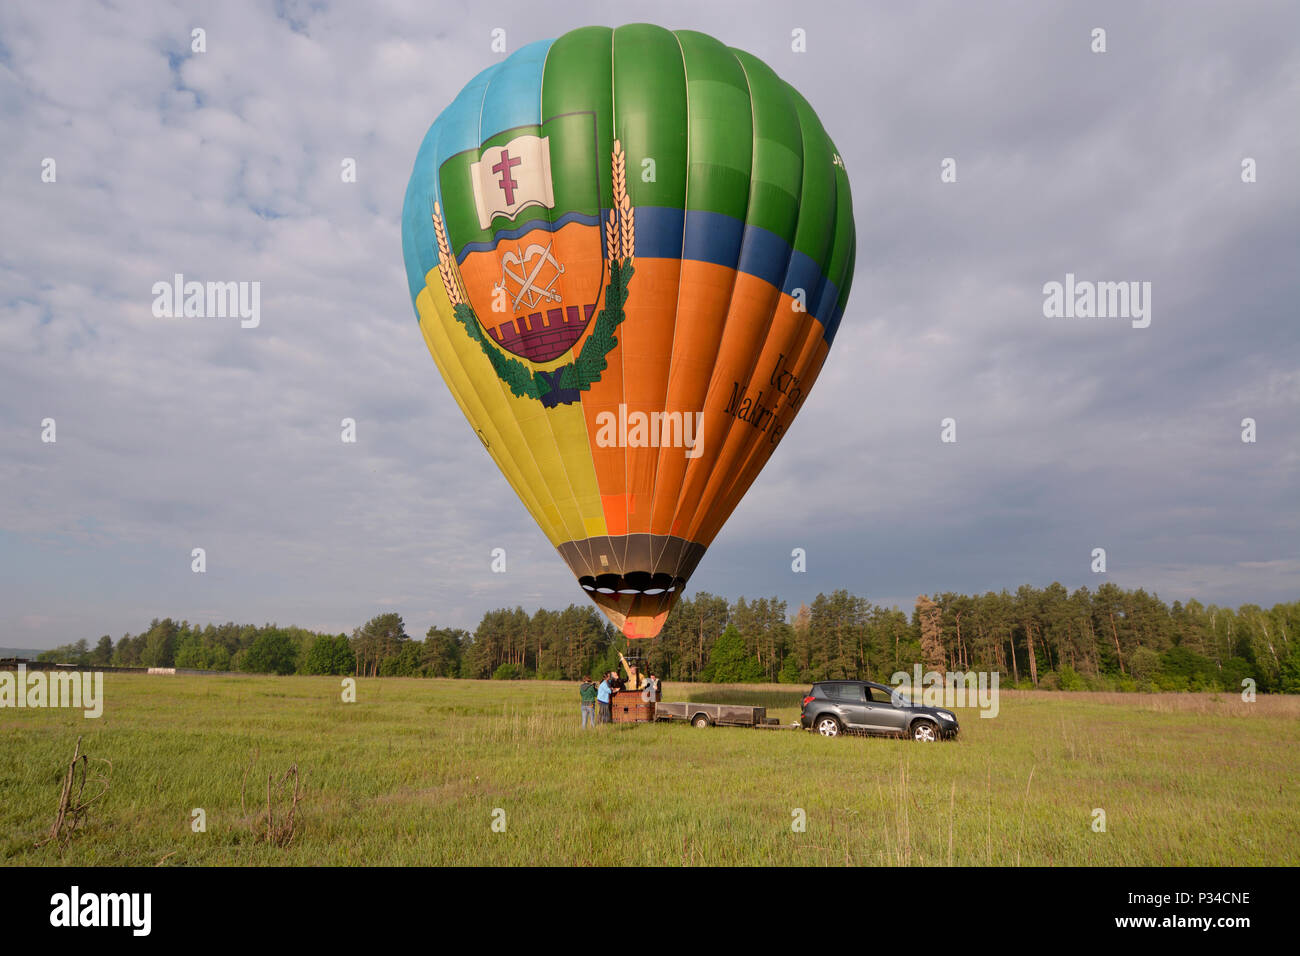 Heißluft-Ballon fertig für den Start, Anhänger mit Ausrüstung ist in der Nähe. Festival der Ballone" Pereiaslav 2018". Mai 6,2018. Pereiaslav, Ukraine Stockfoto